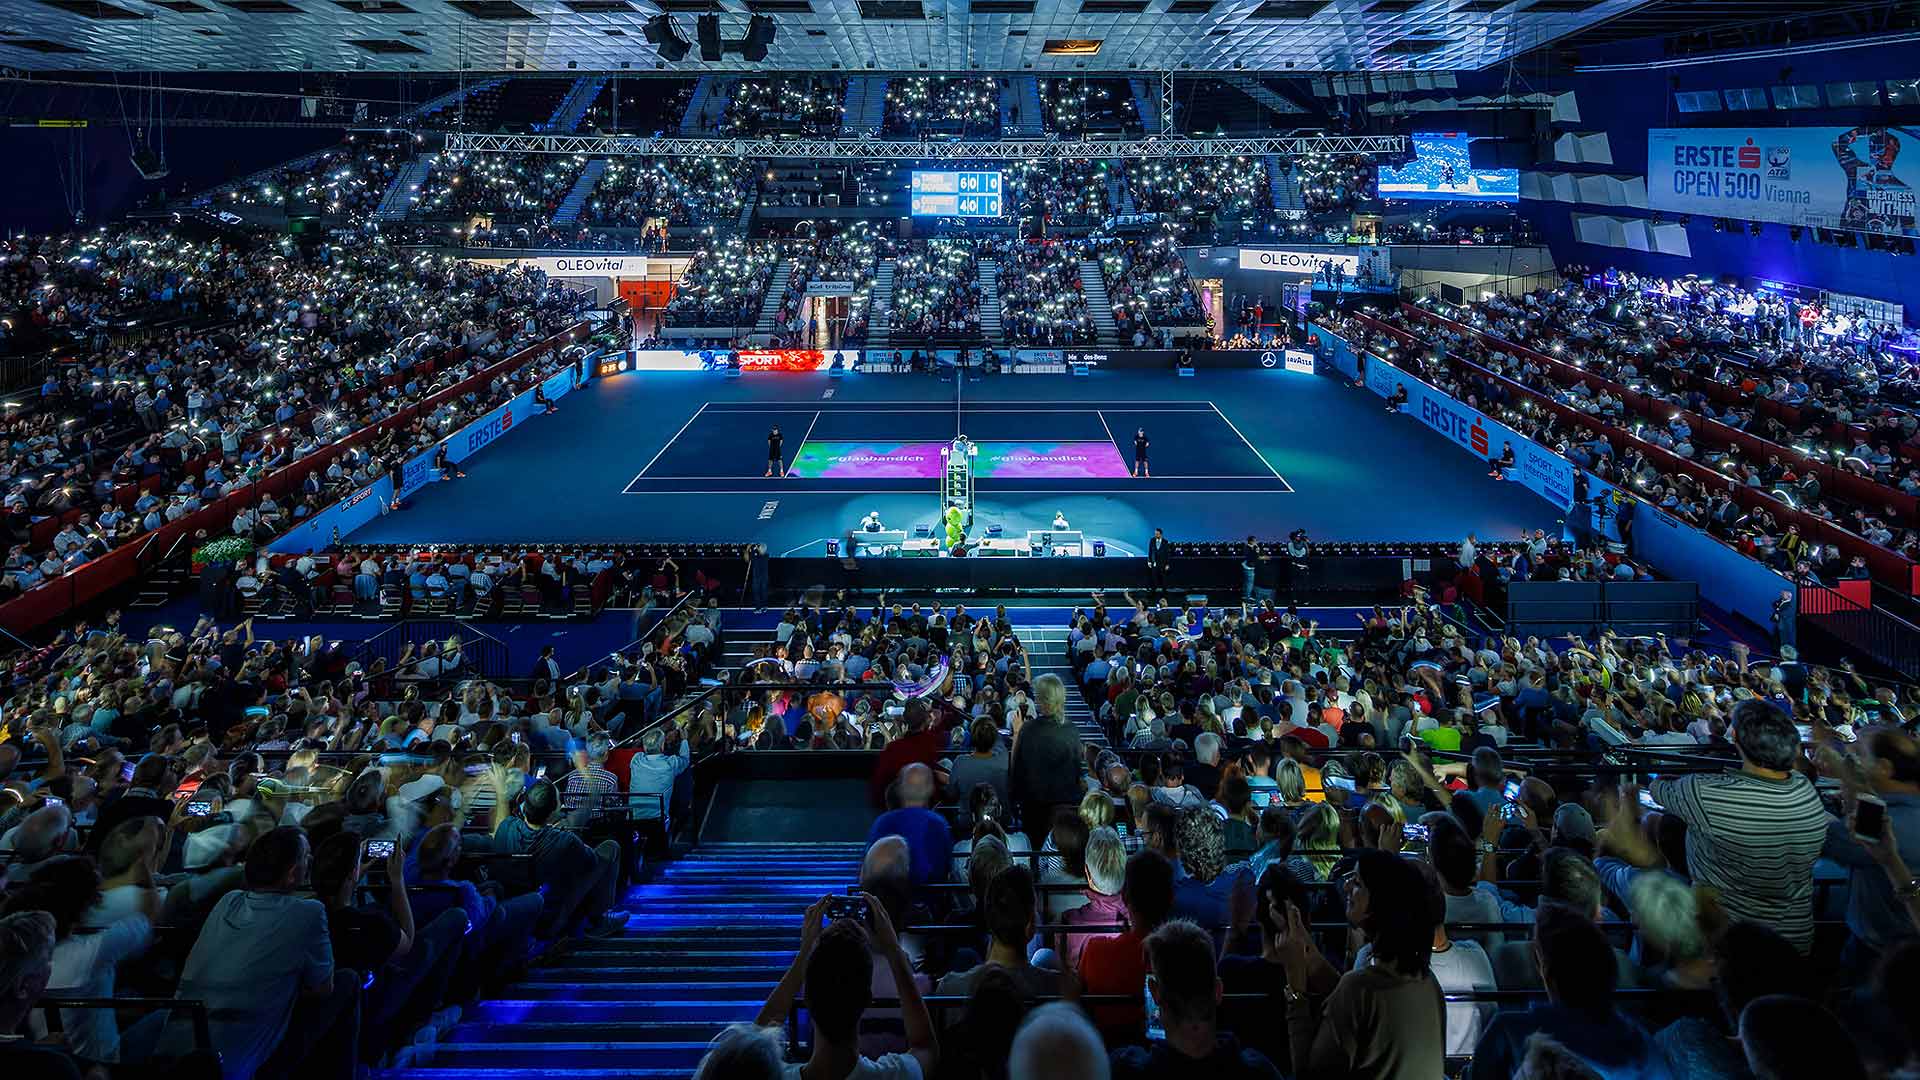 Watch the 2023 Erste Bank Open live on Tennis TV!